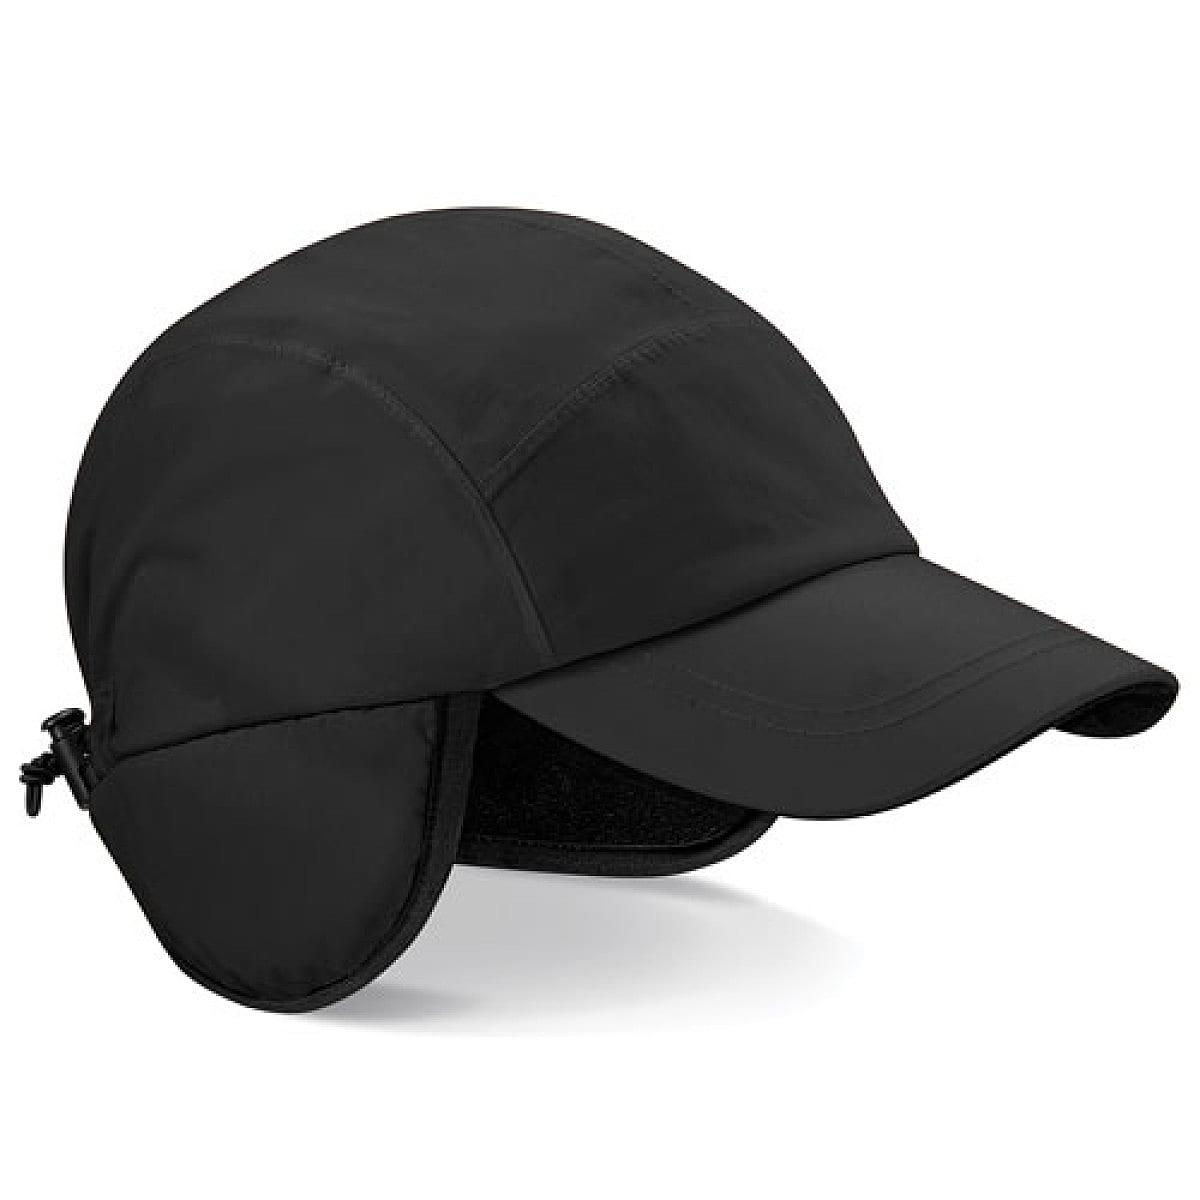 Beechfield Mountain Cap in Black (Product Code: B355)